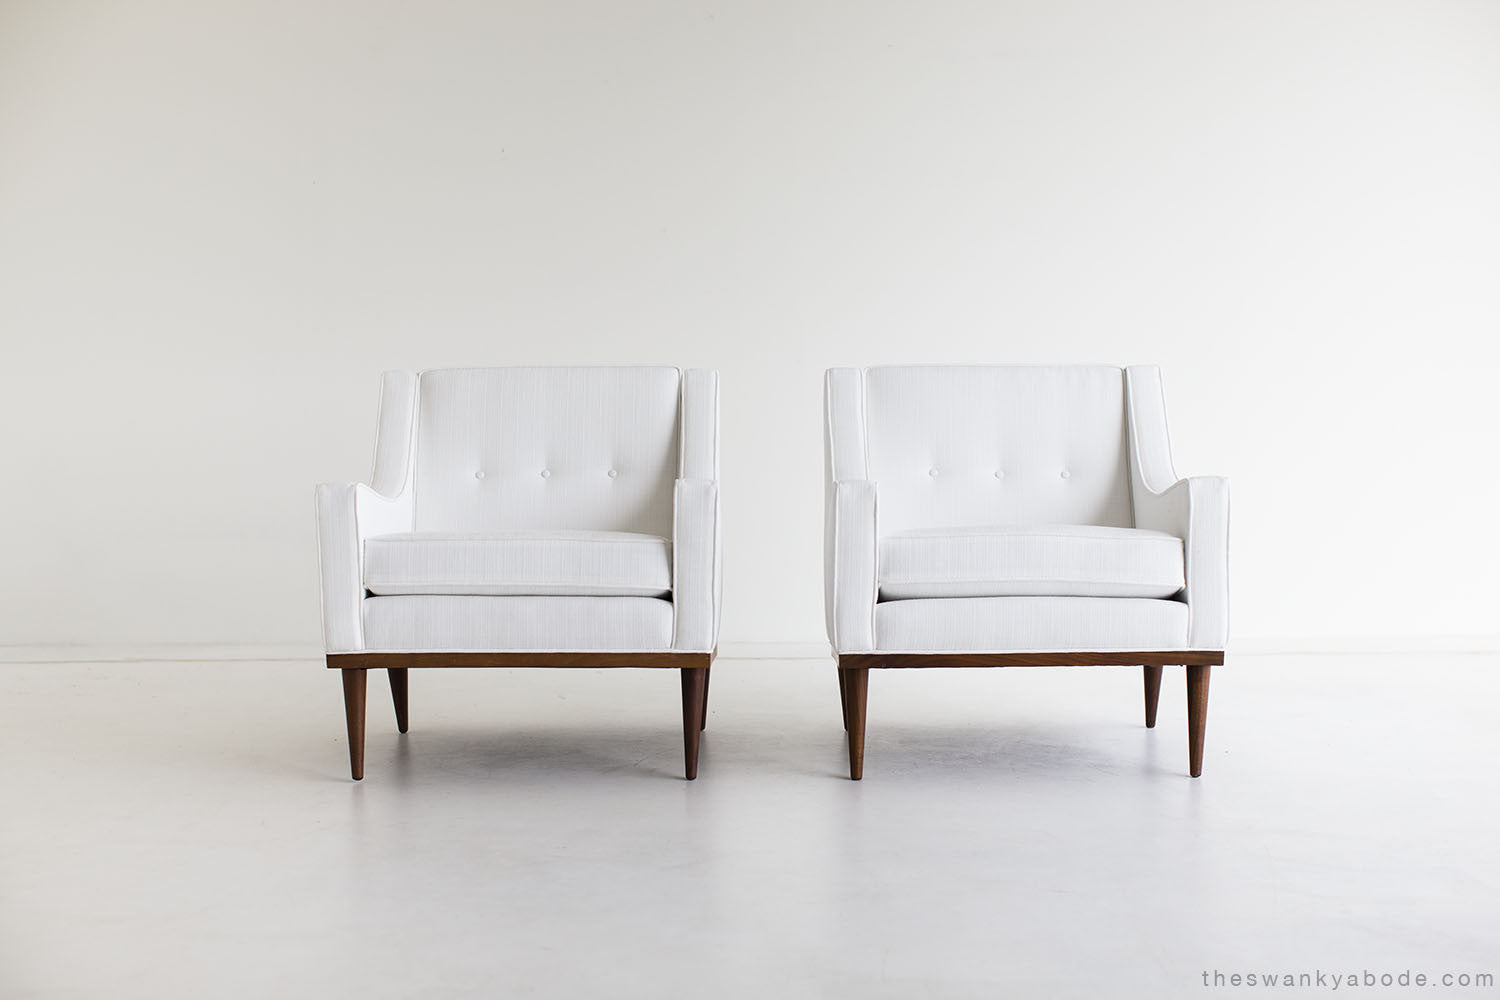 Milo Baughman Lounge Chairs for James Inc. - 01181607